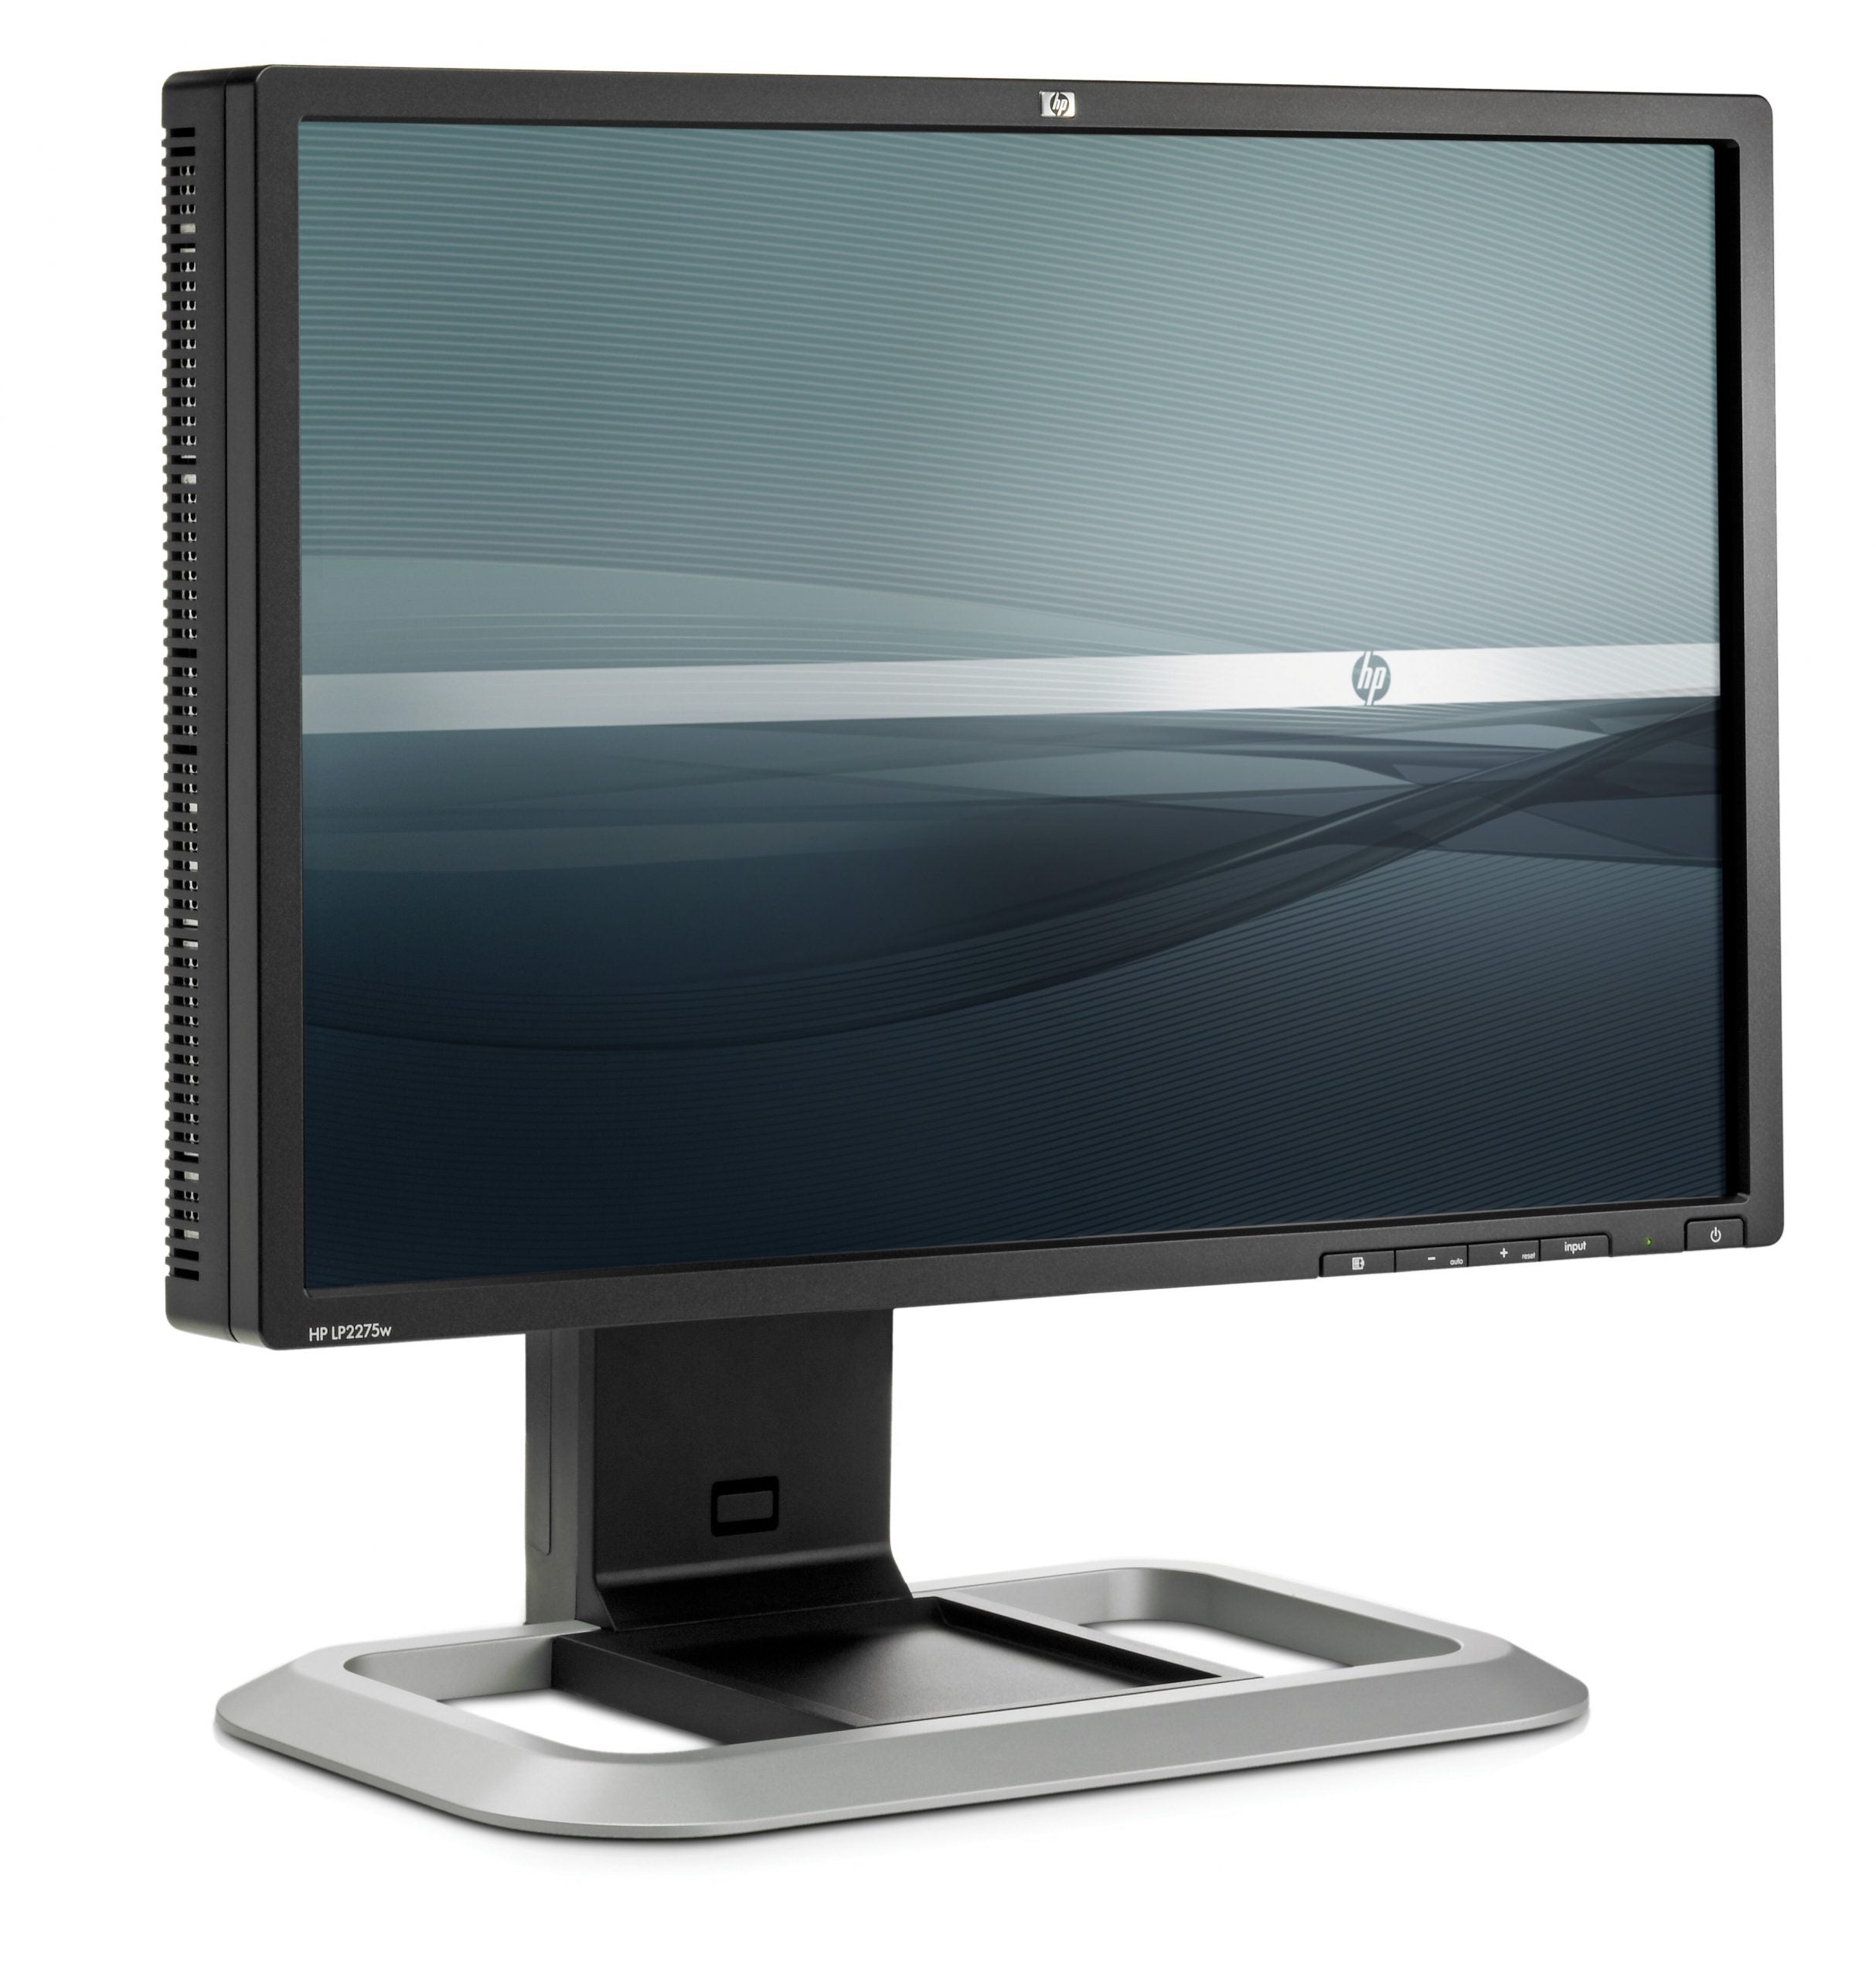 HP LP2275w PVA LCD Monitor 22